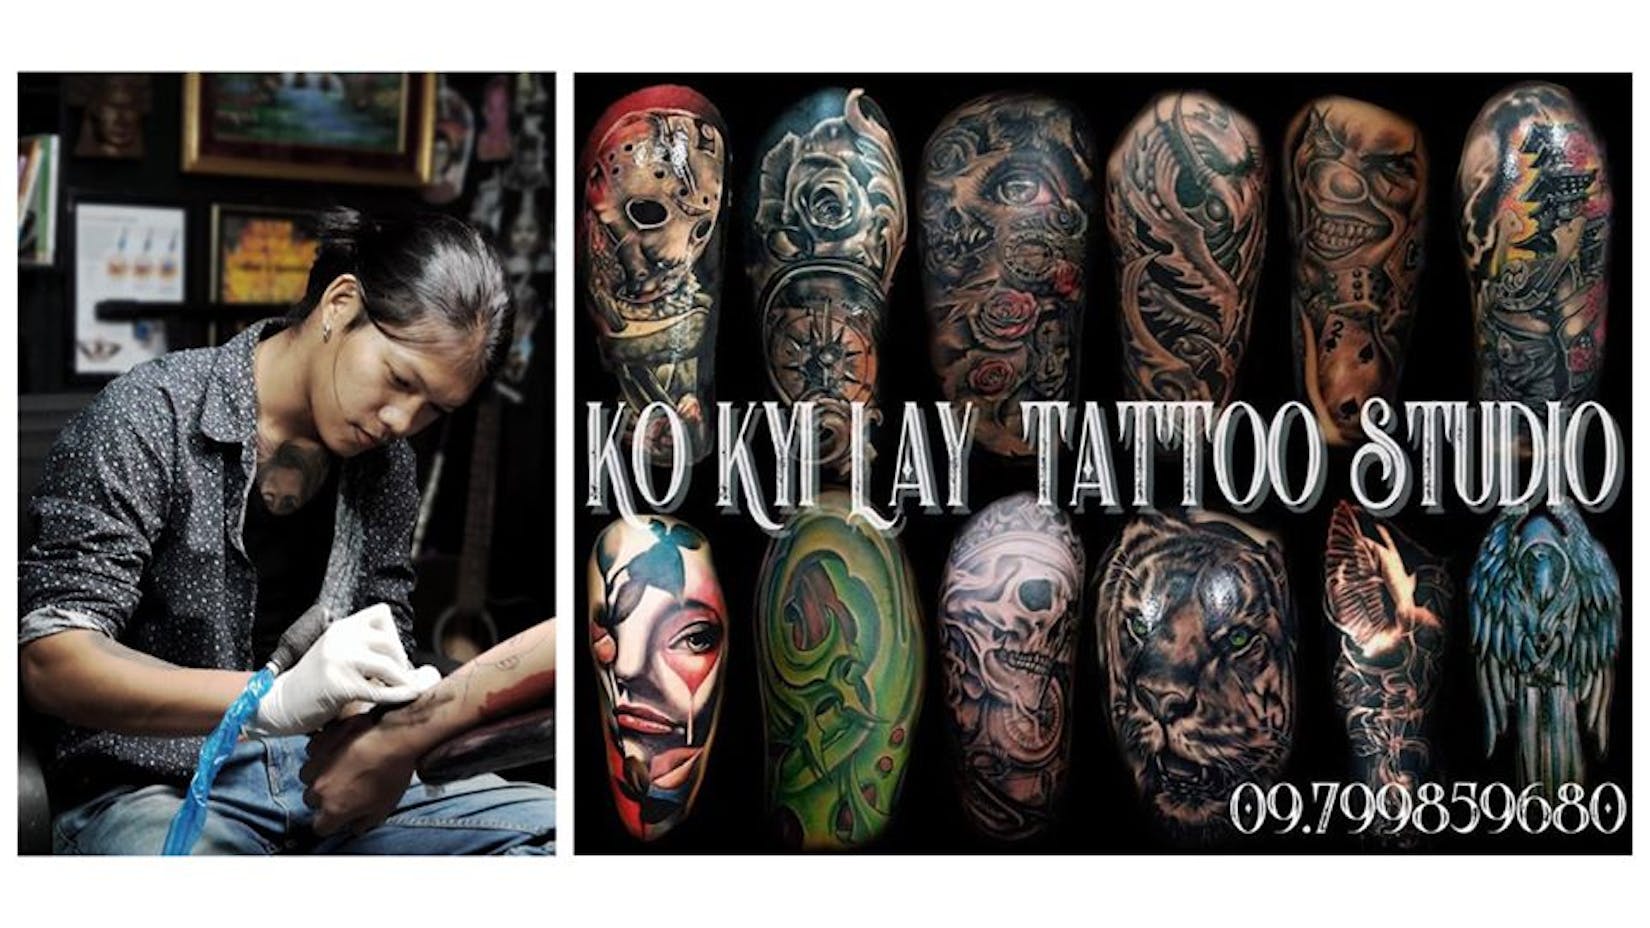 Ko Kyi Lay Tattoo Studio | Beauty